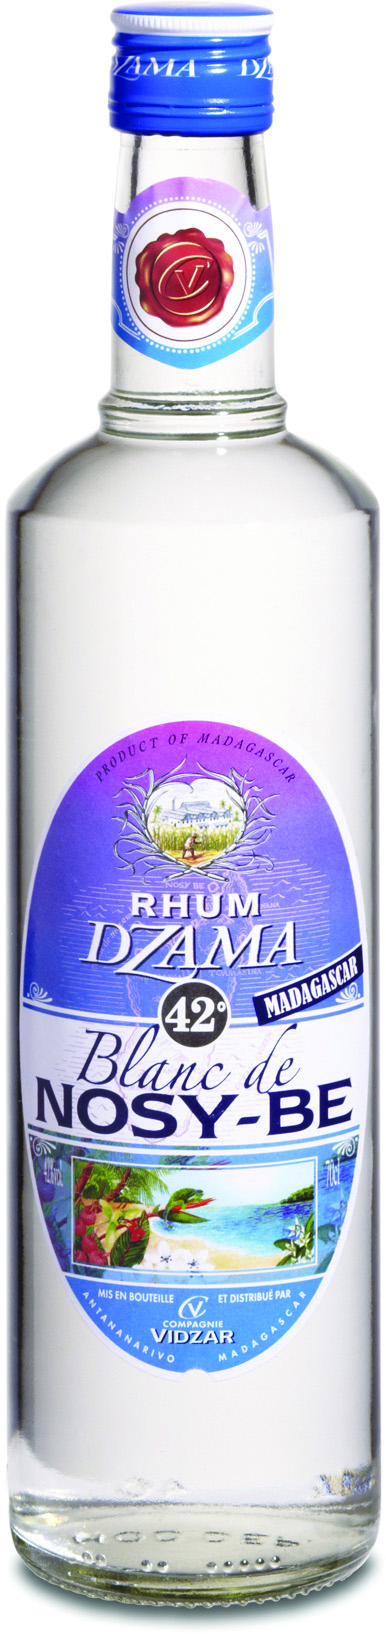 Rhum Blanc Dzama De Nosy-be 42 12 X 35 Cl - DZAMA